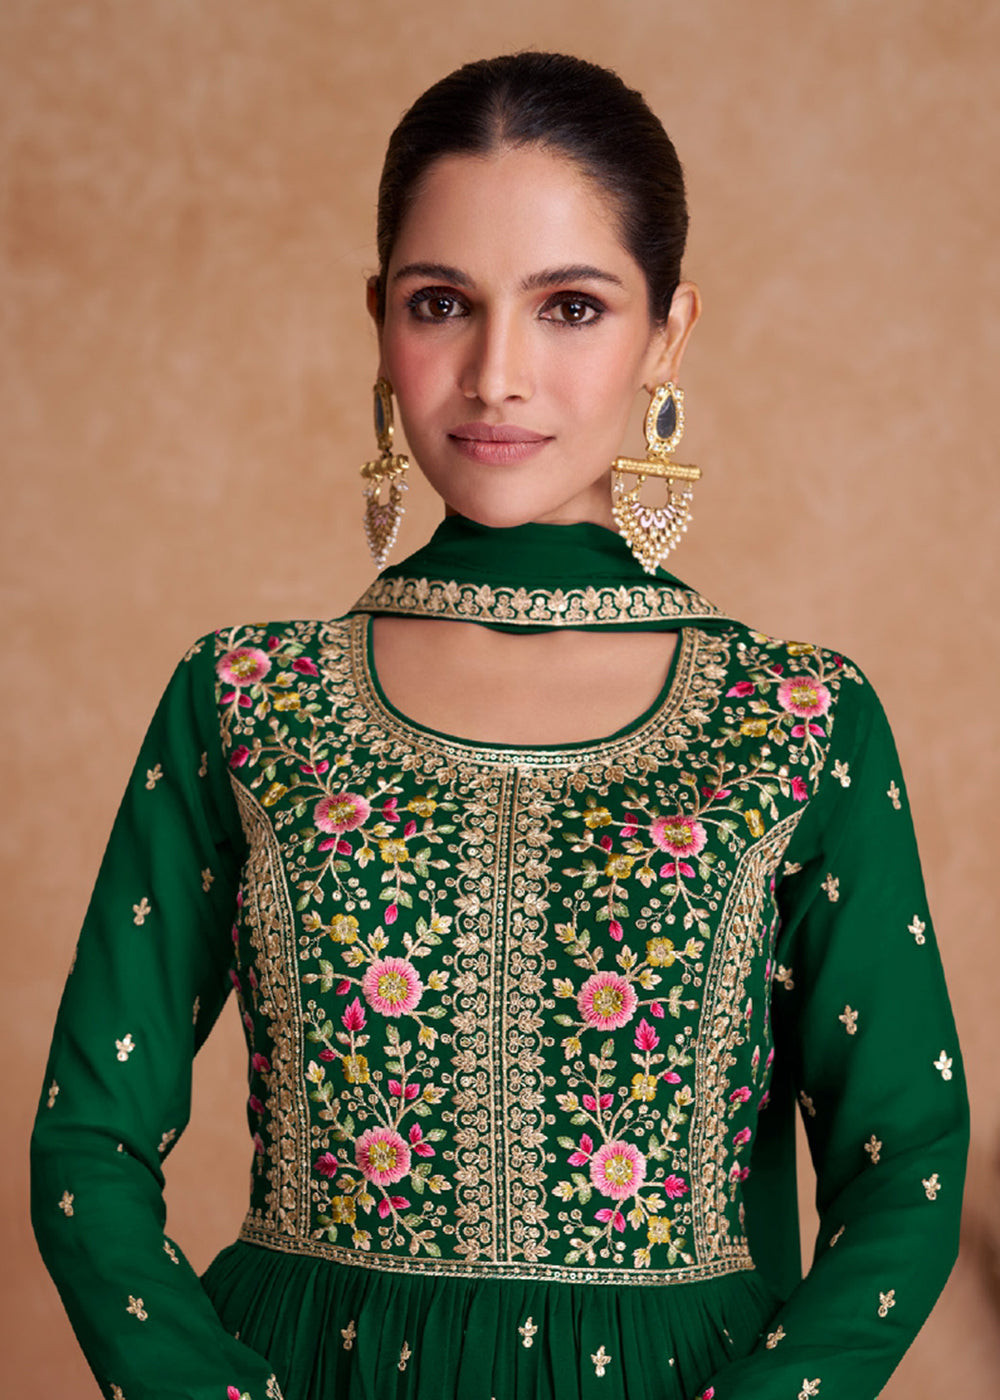 Buy Now Dark Green Wedding Long Top Georgette Palazzo Salwar Suit Online in USA, UK, Canada, Germany, Australia & Worldwide at Empress Clothing.